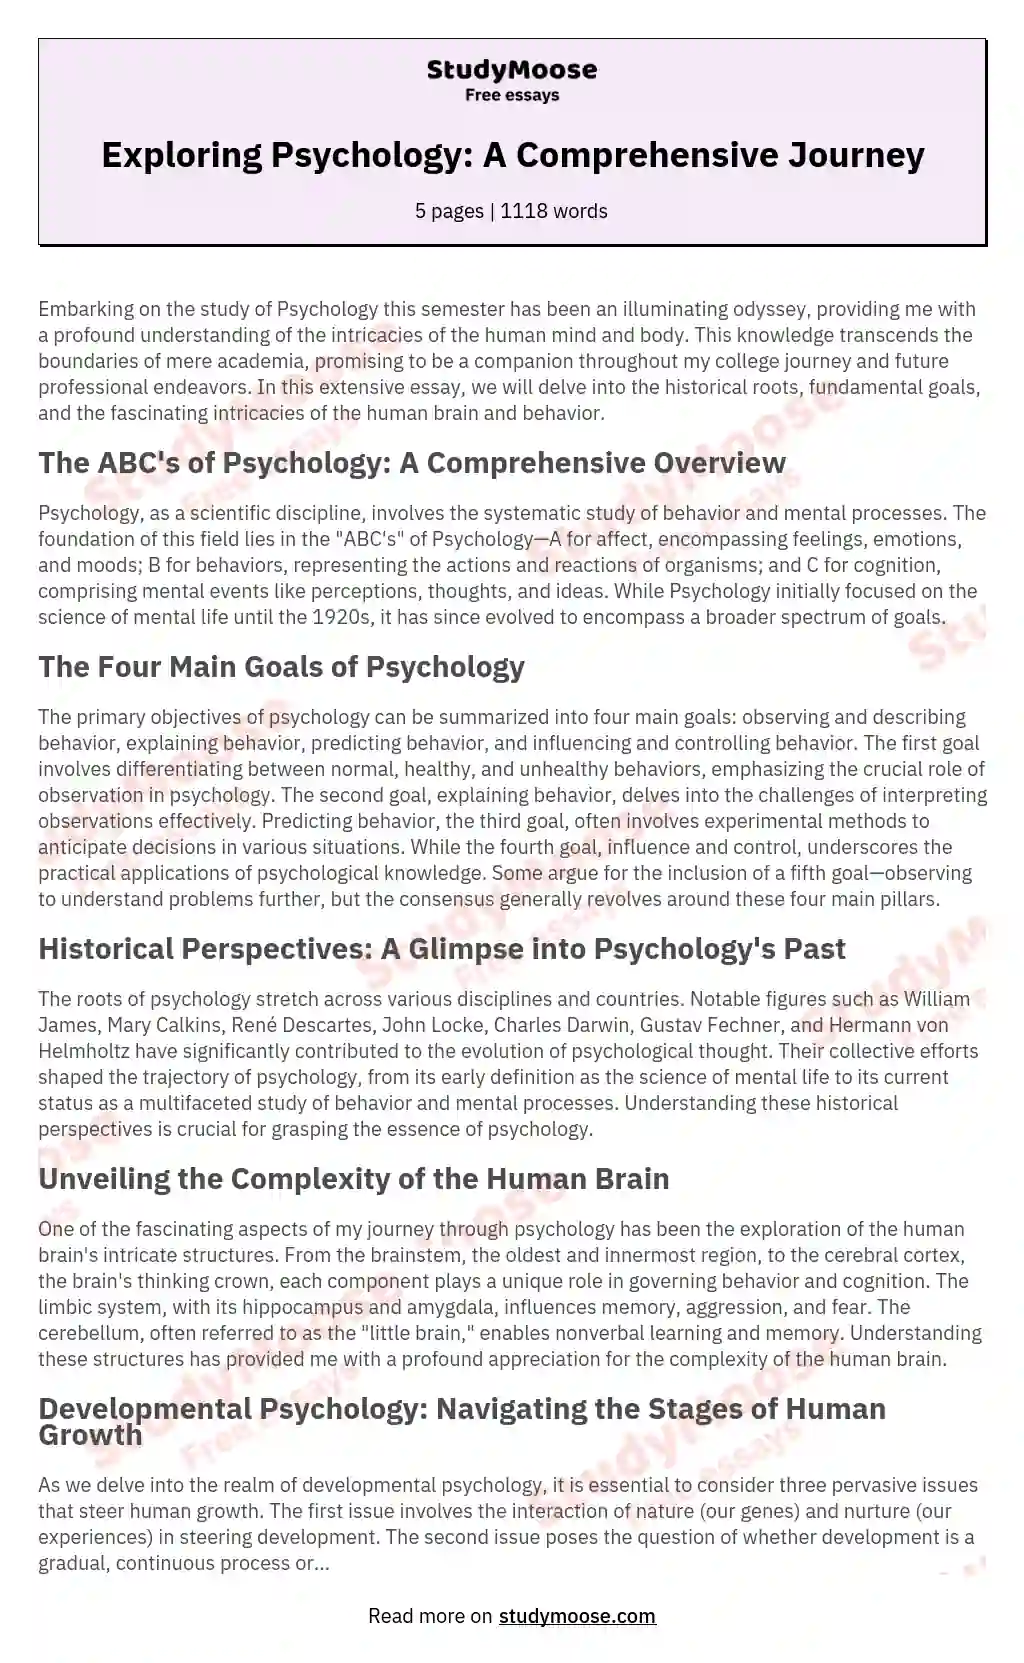 Exploring Psychology: A Comprehensive Journey essay